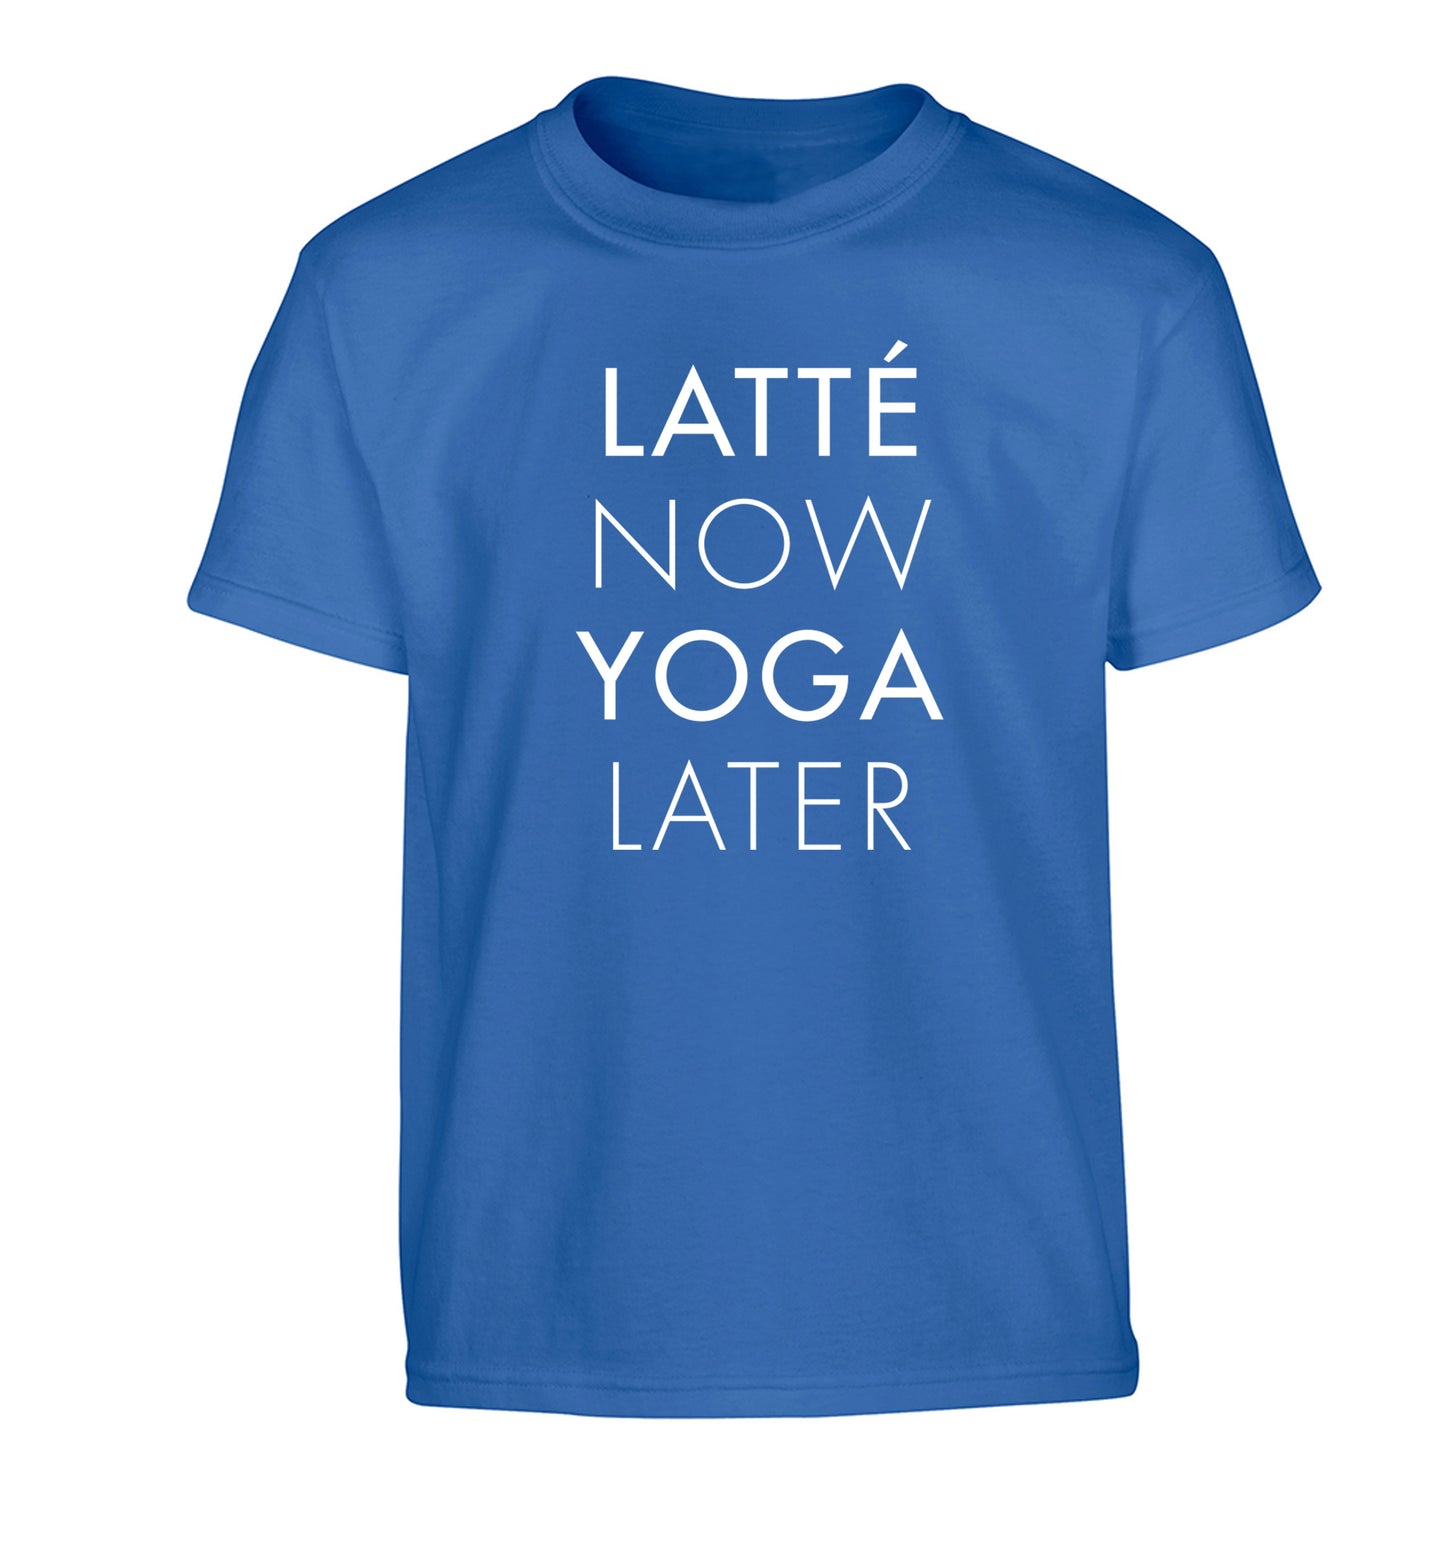 Latte now yoga later Children's blue Tshirt 12-14 Years